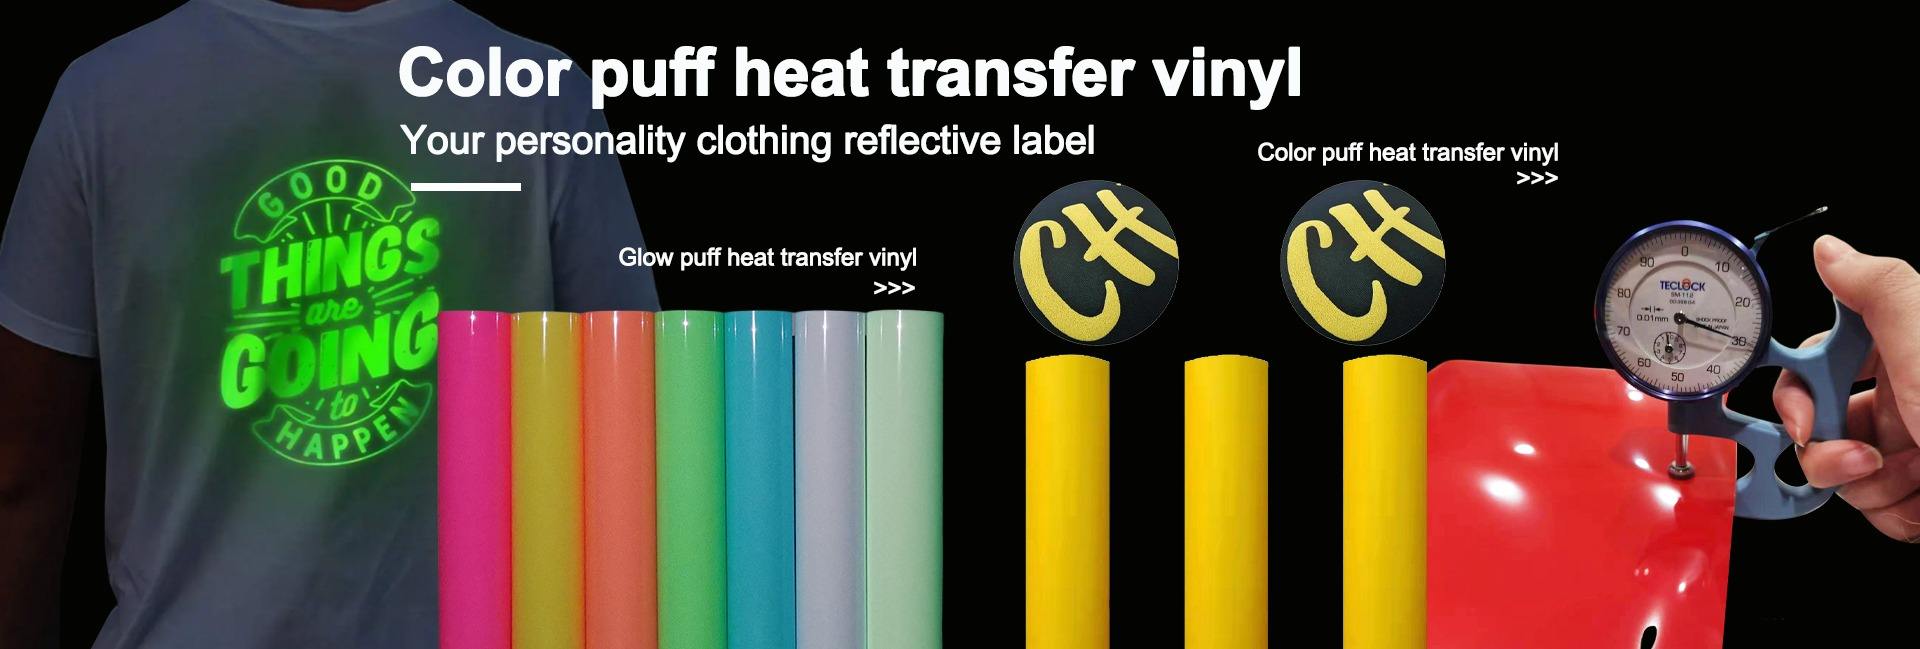 Color Puff Heat Transfer Vinyl Manufacturer